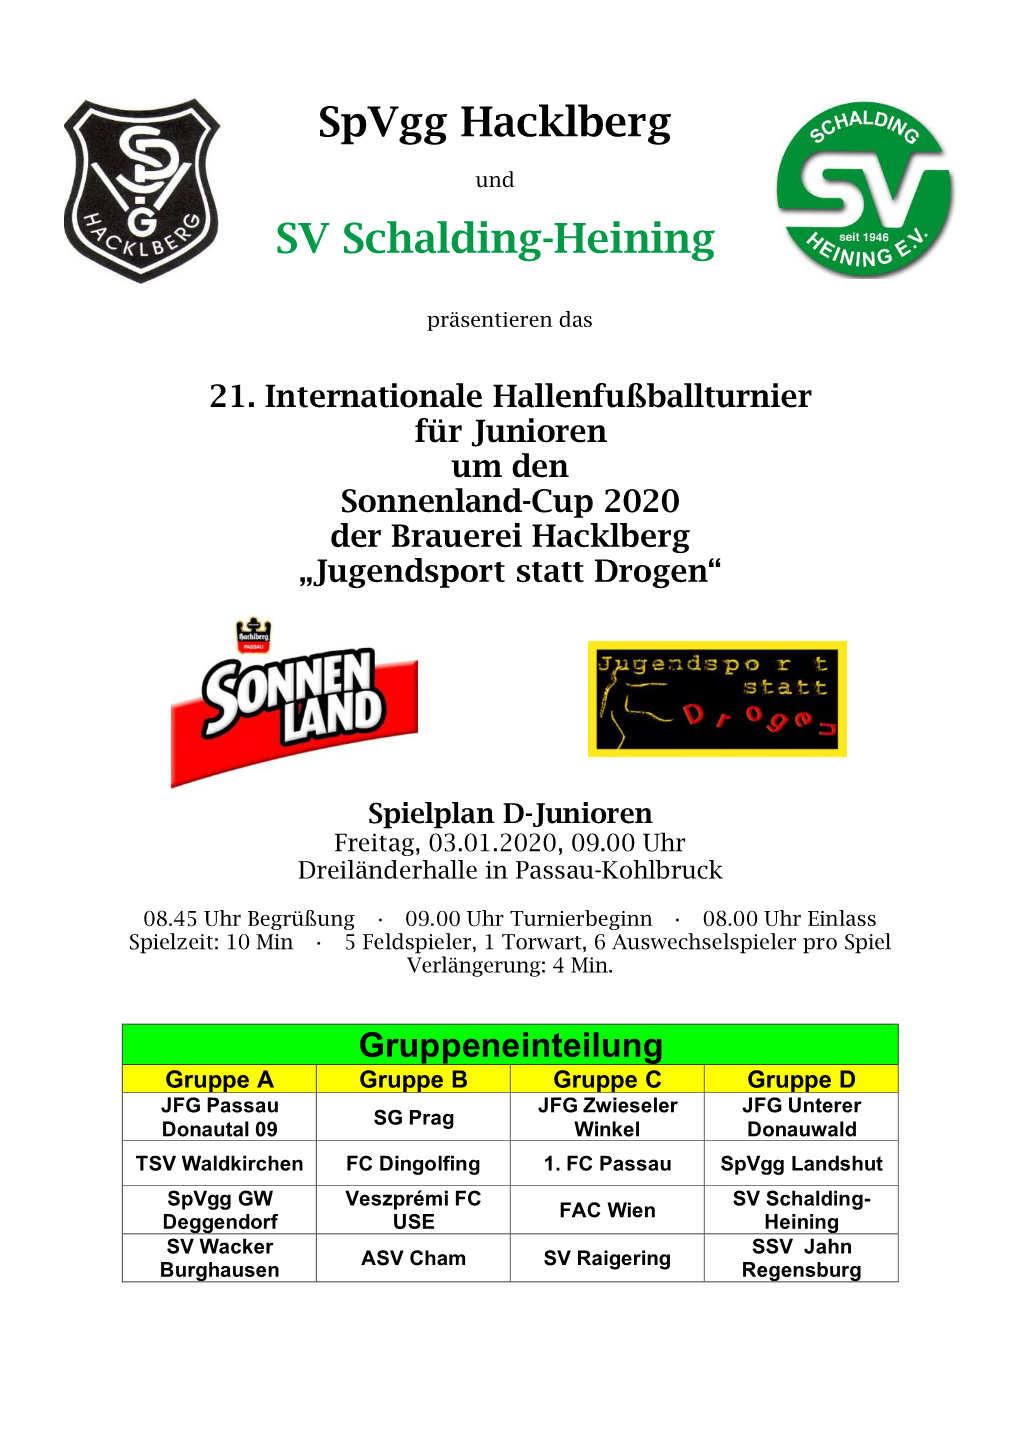 Spvgg Hacklberg SV Schalding-Heining